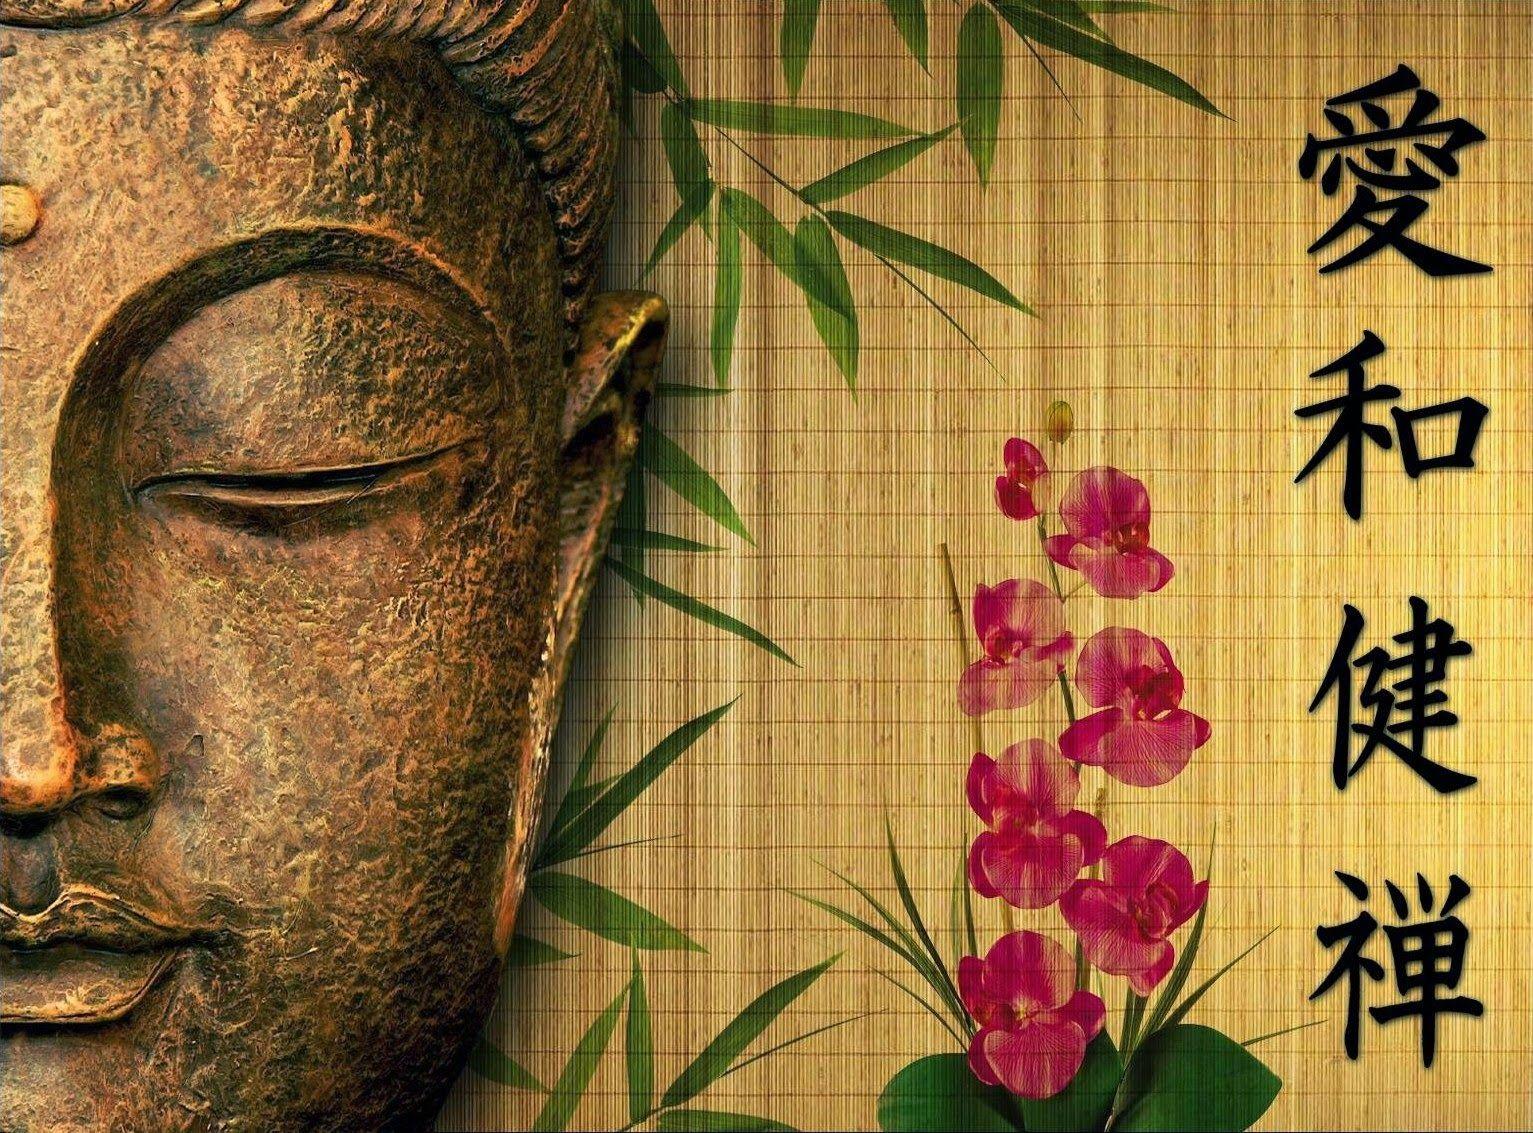 Lord Buddha face Art HD image and statue wallpaper. Wallpaper HD